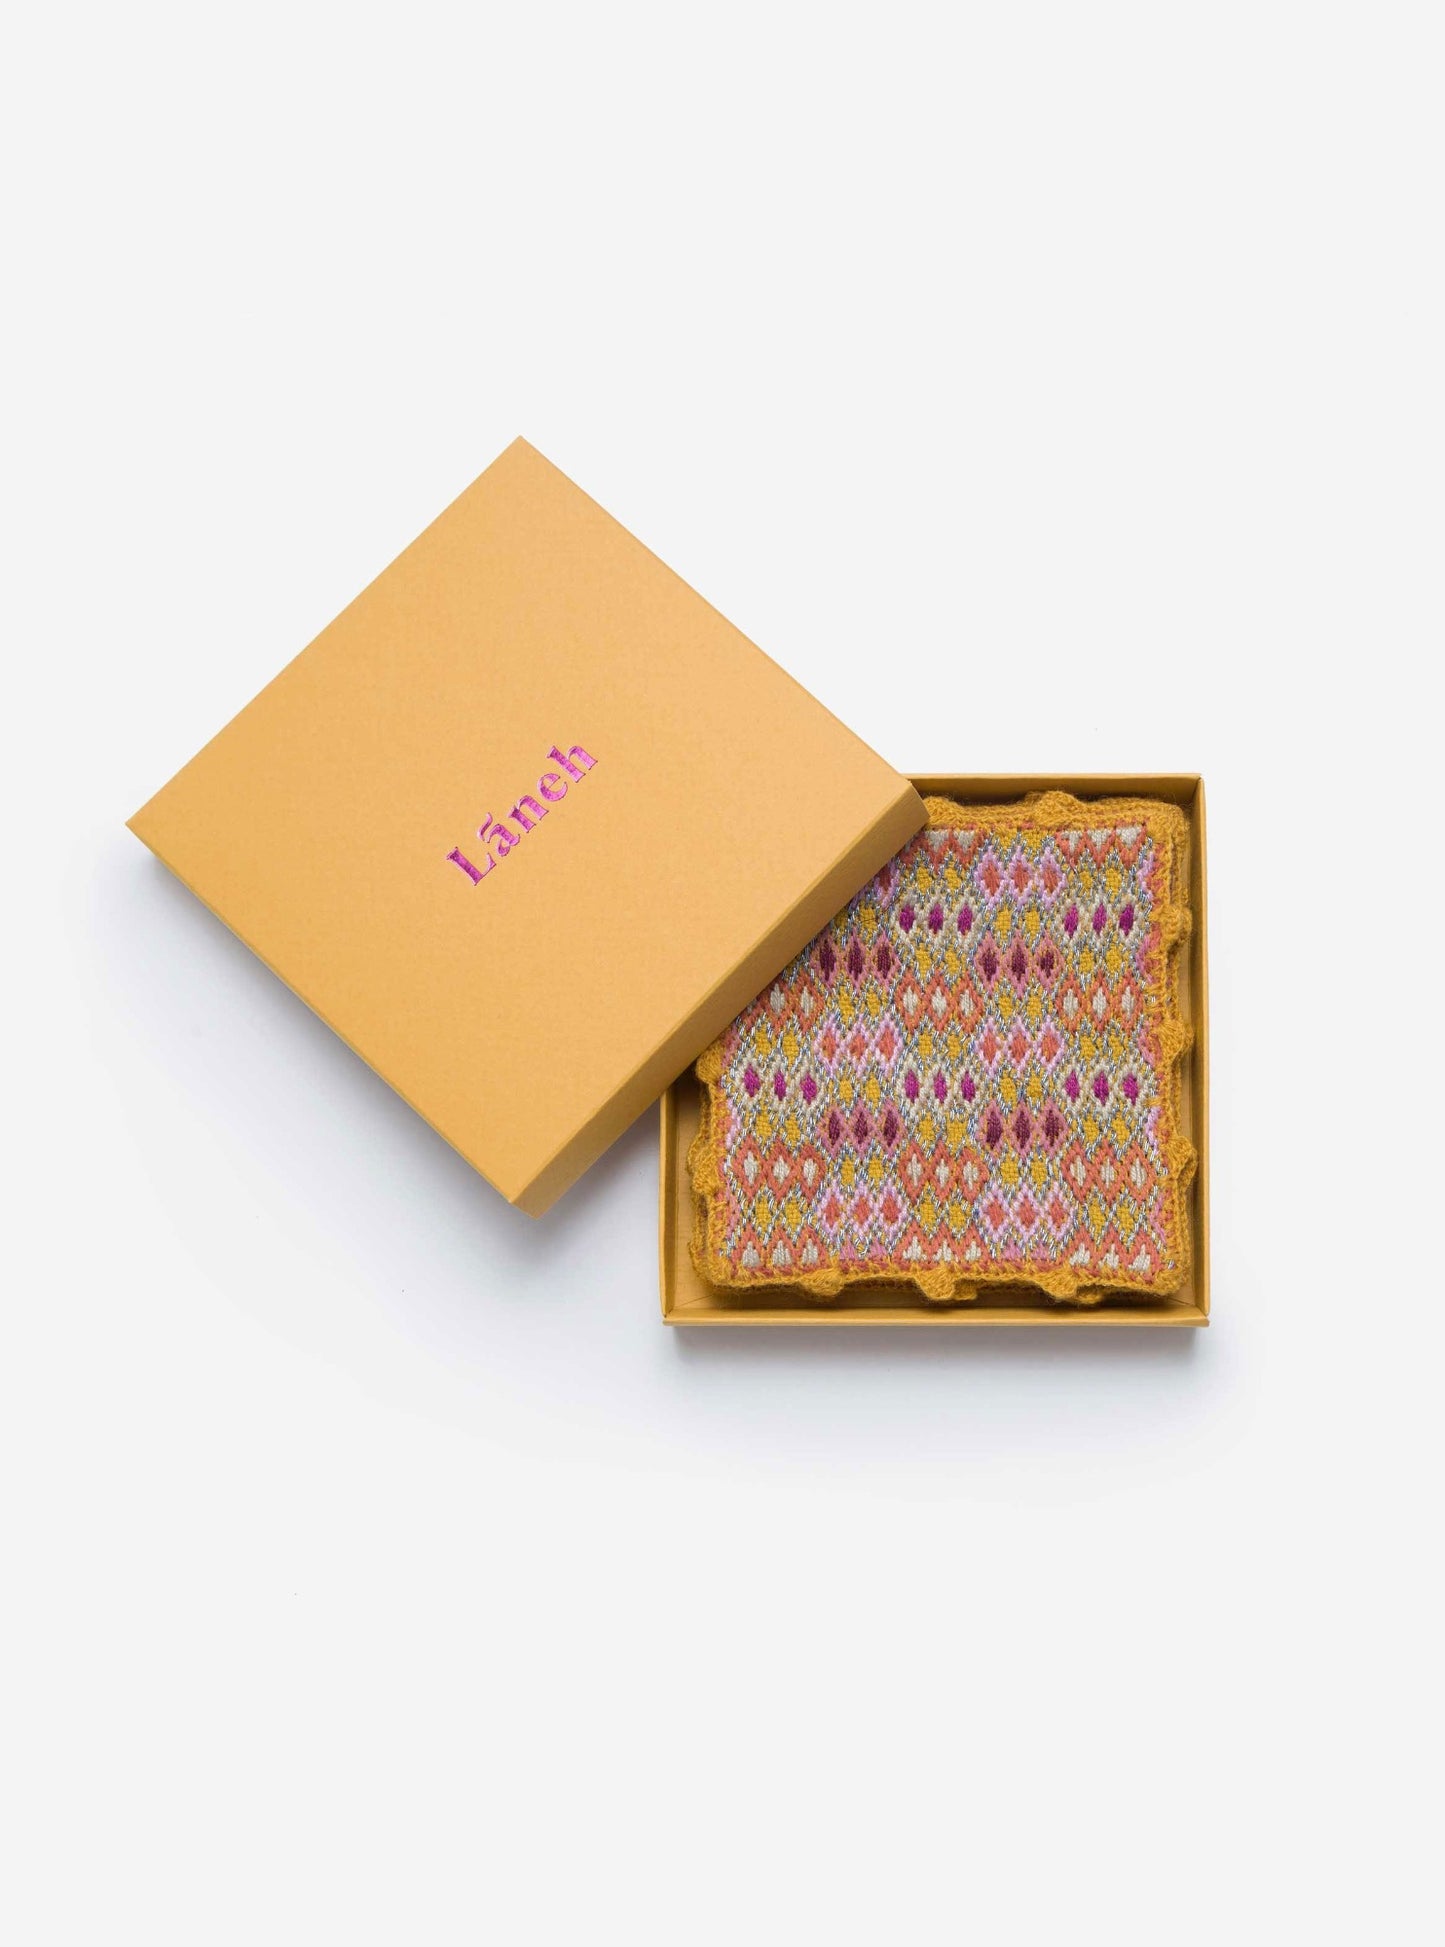 Mustard/ winter rose Bibi coaster set with embroidery inside a yellow Laneh box